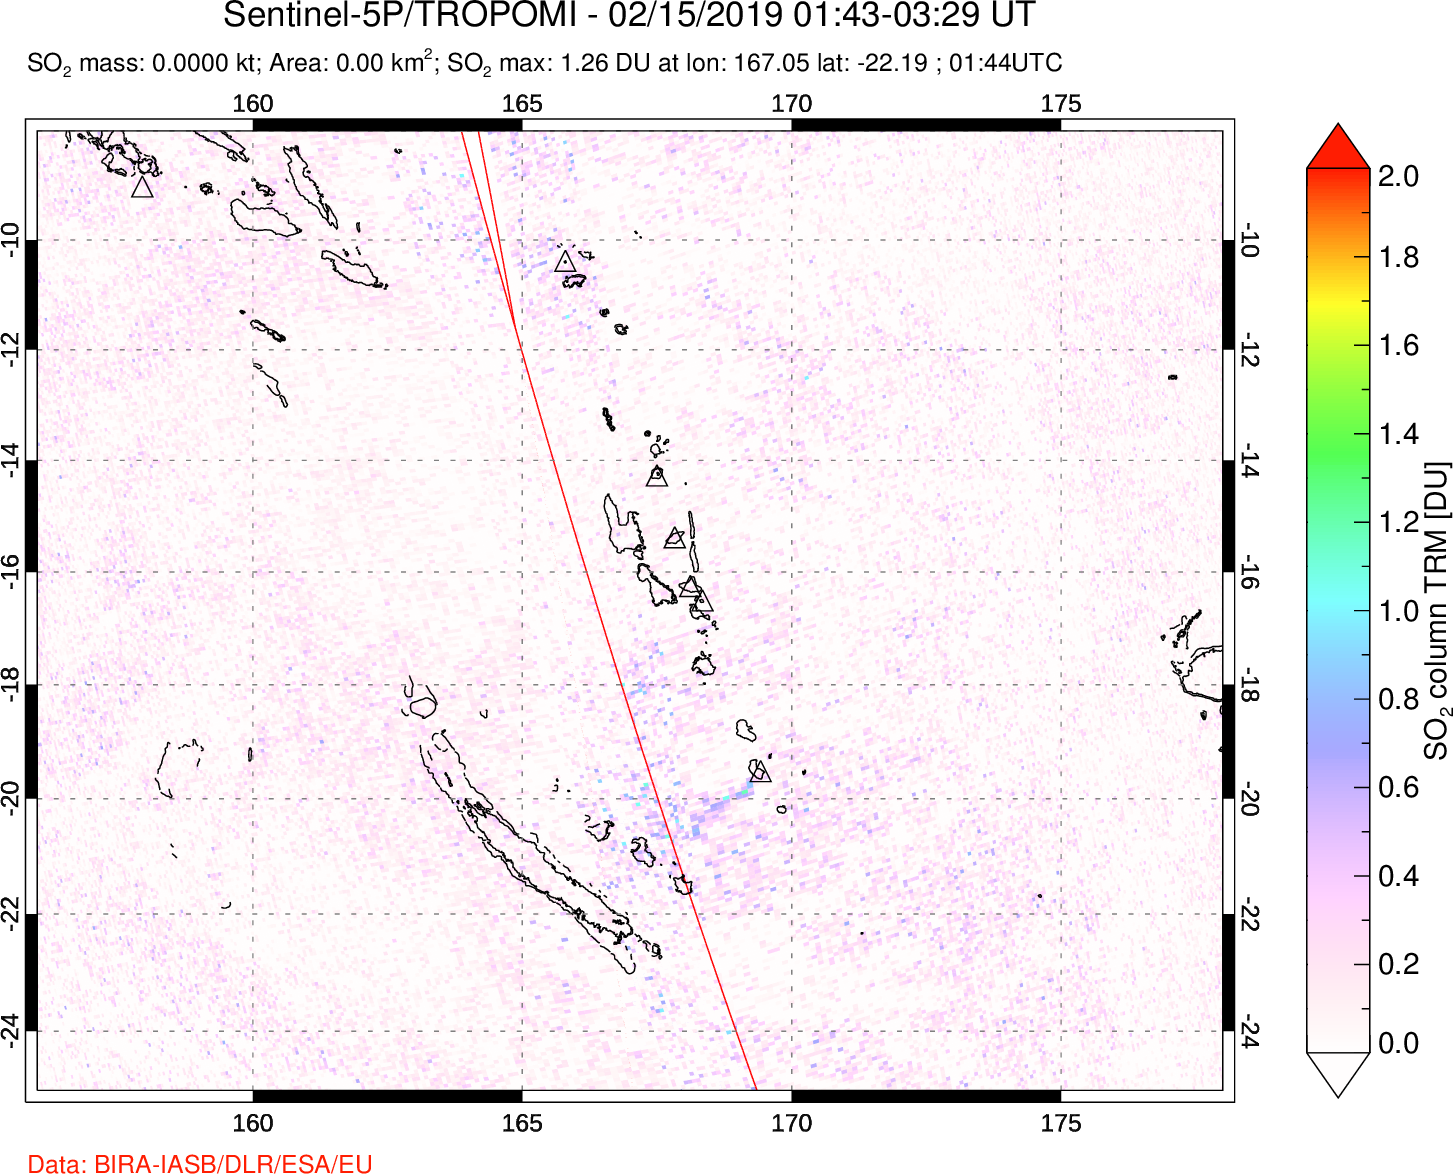 A sulfur dioxide image over Vanuatu, South Pacific on Feb 15, 2019.